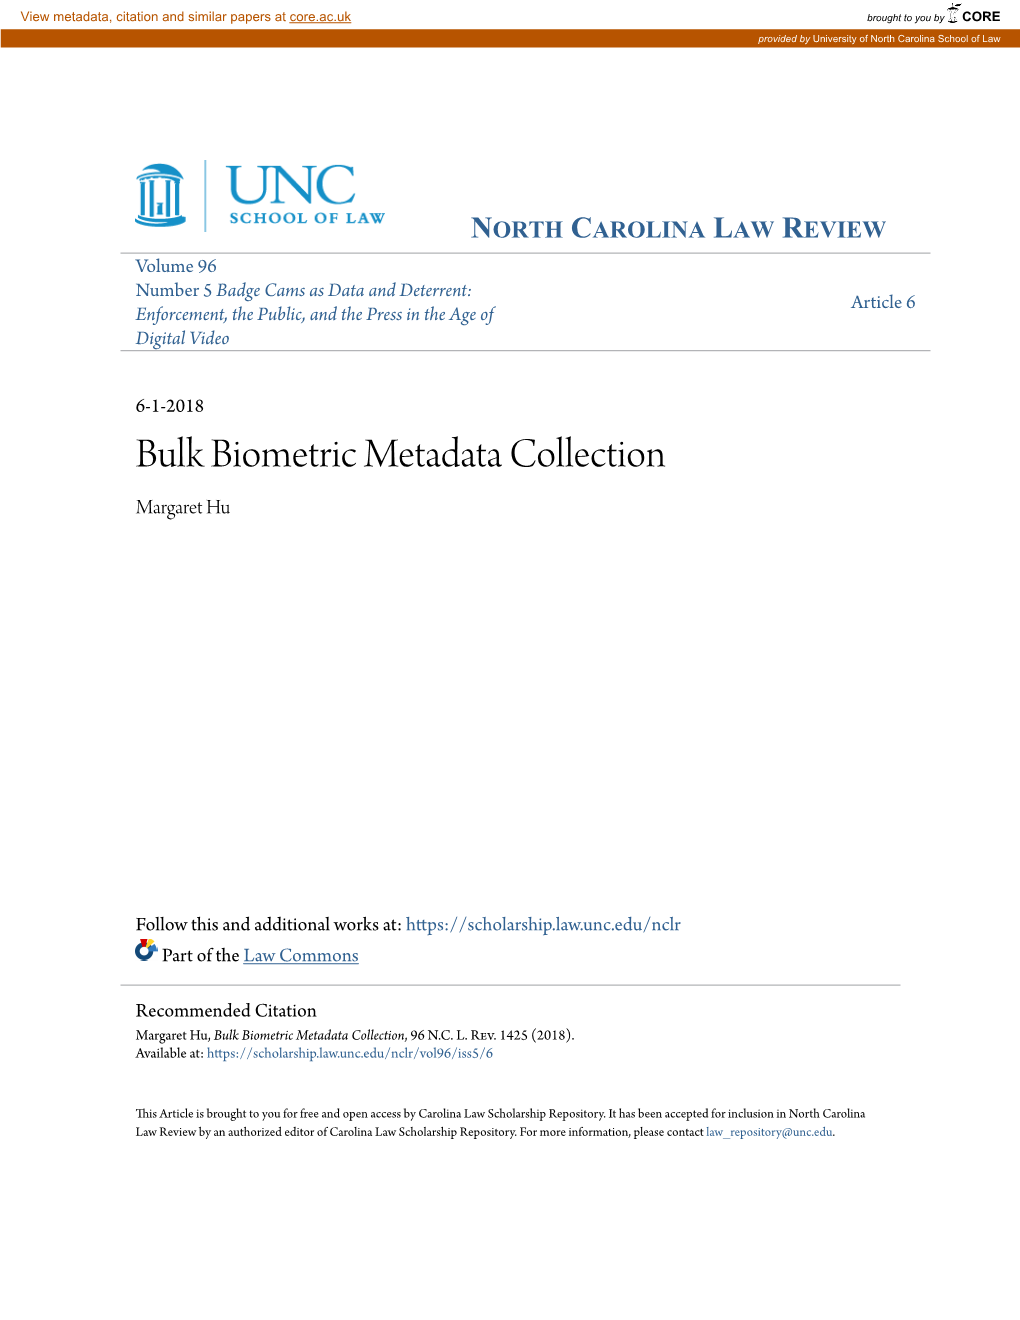 Bulk Biometric Metadata Collection Margaret Hu